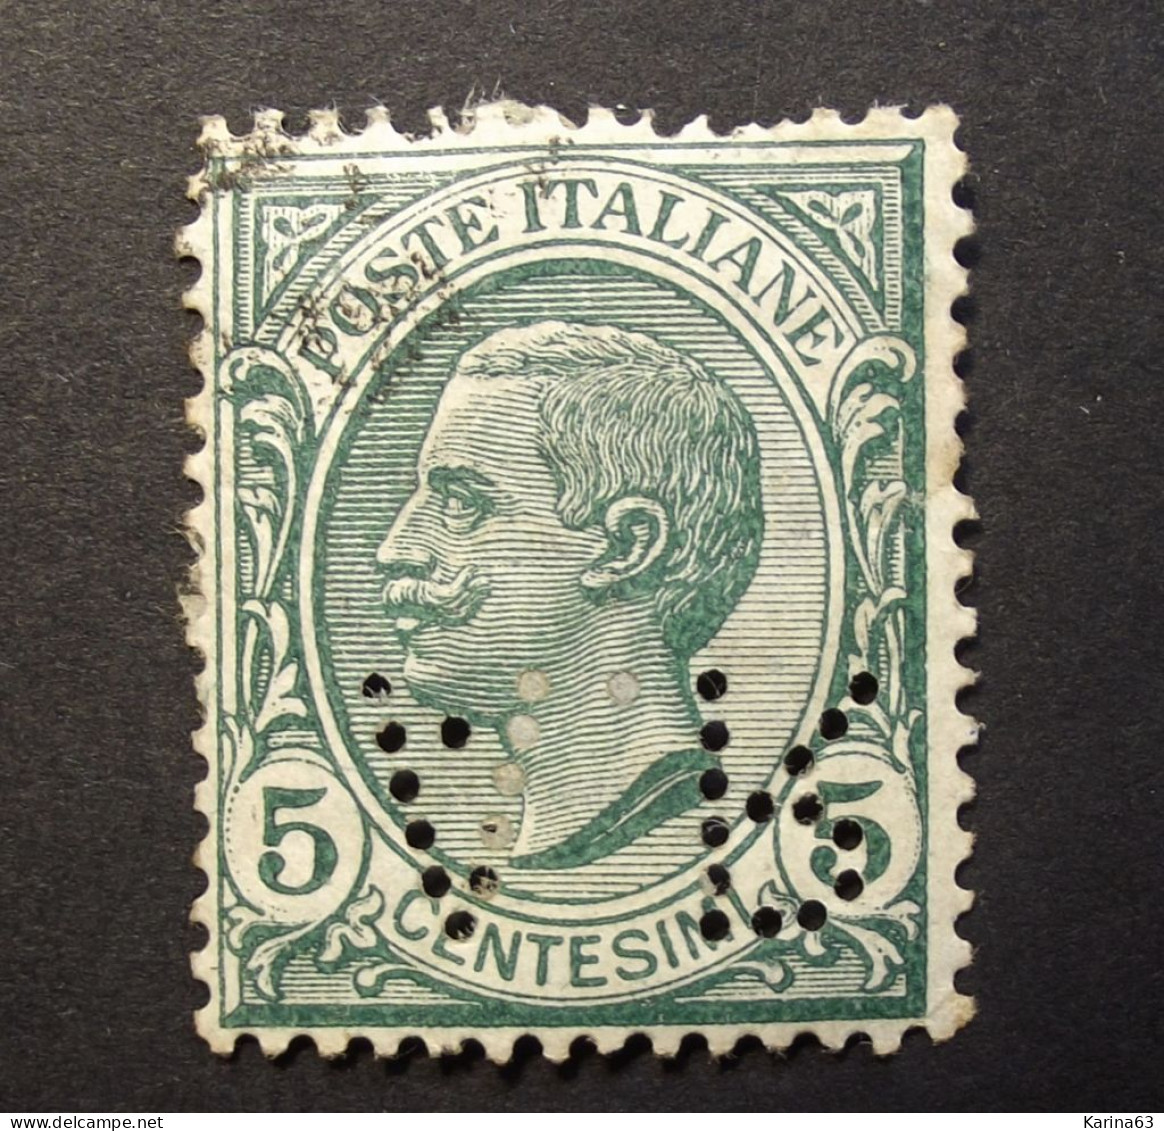 Italia - Italy - 1906 -  Perfin - Lochung -  A R -  A.Rejna - Milano  -  Cancelled - Used